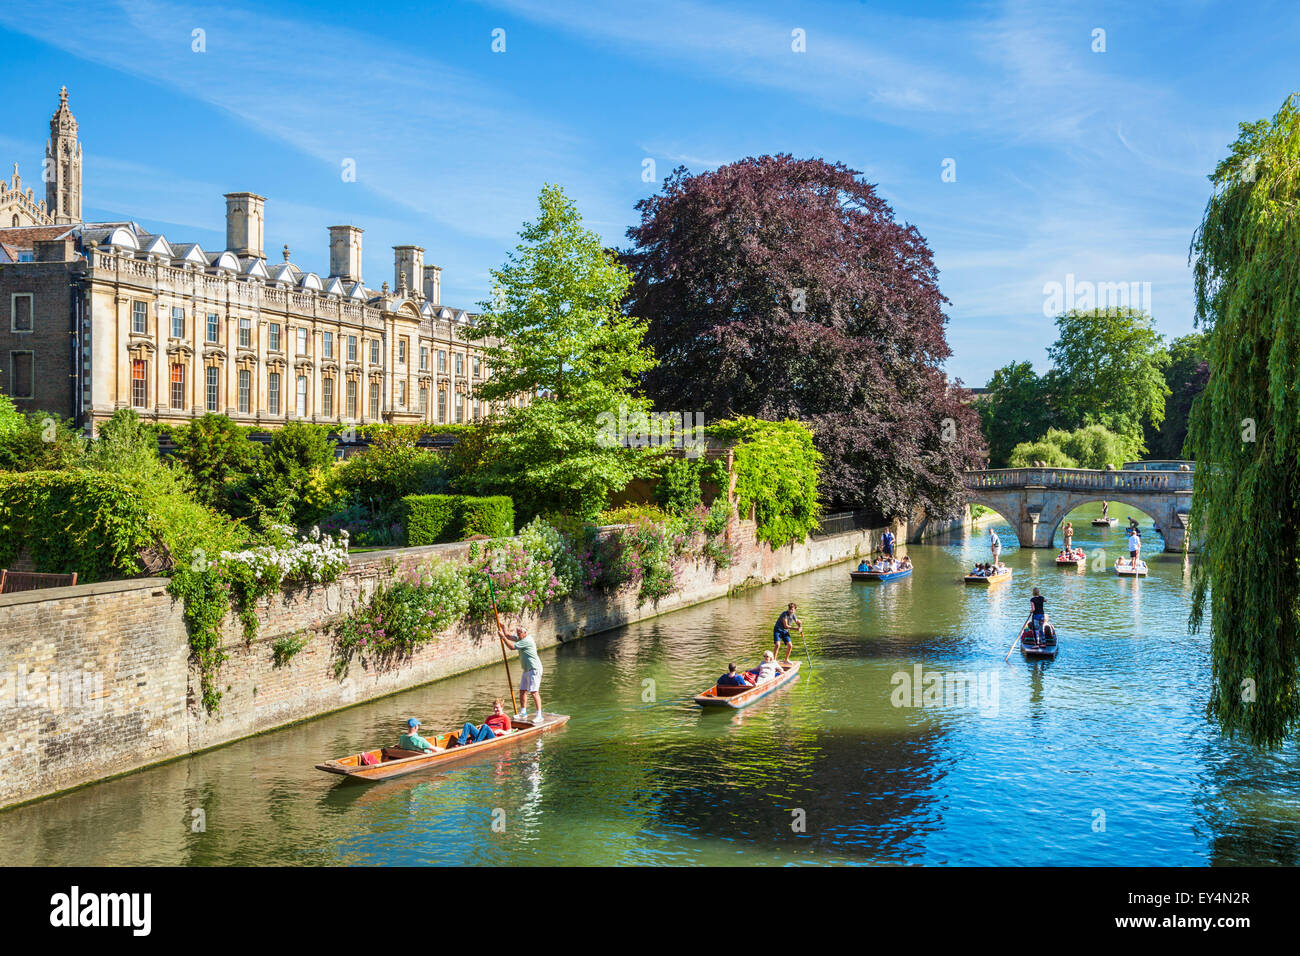 Punting, Clare college and the River Cam Cambridge Cambridgeshire England UK GB EU Europe Stock Photo